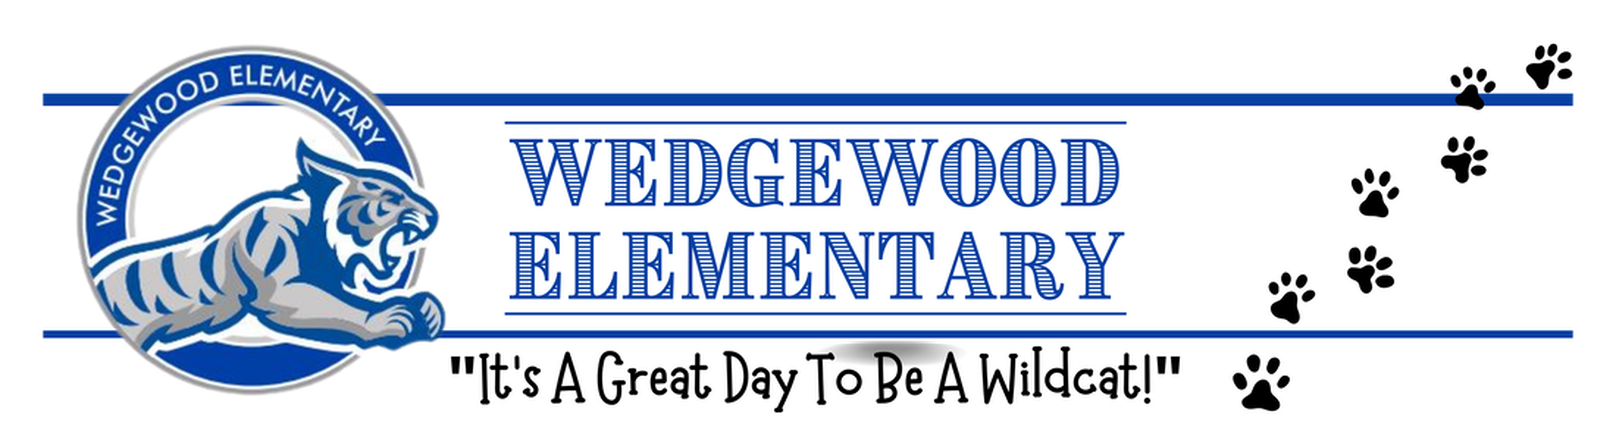 Wedgewood Elementary School